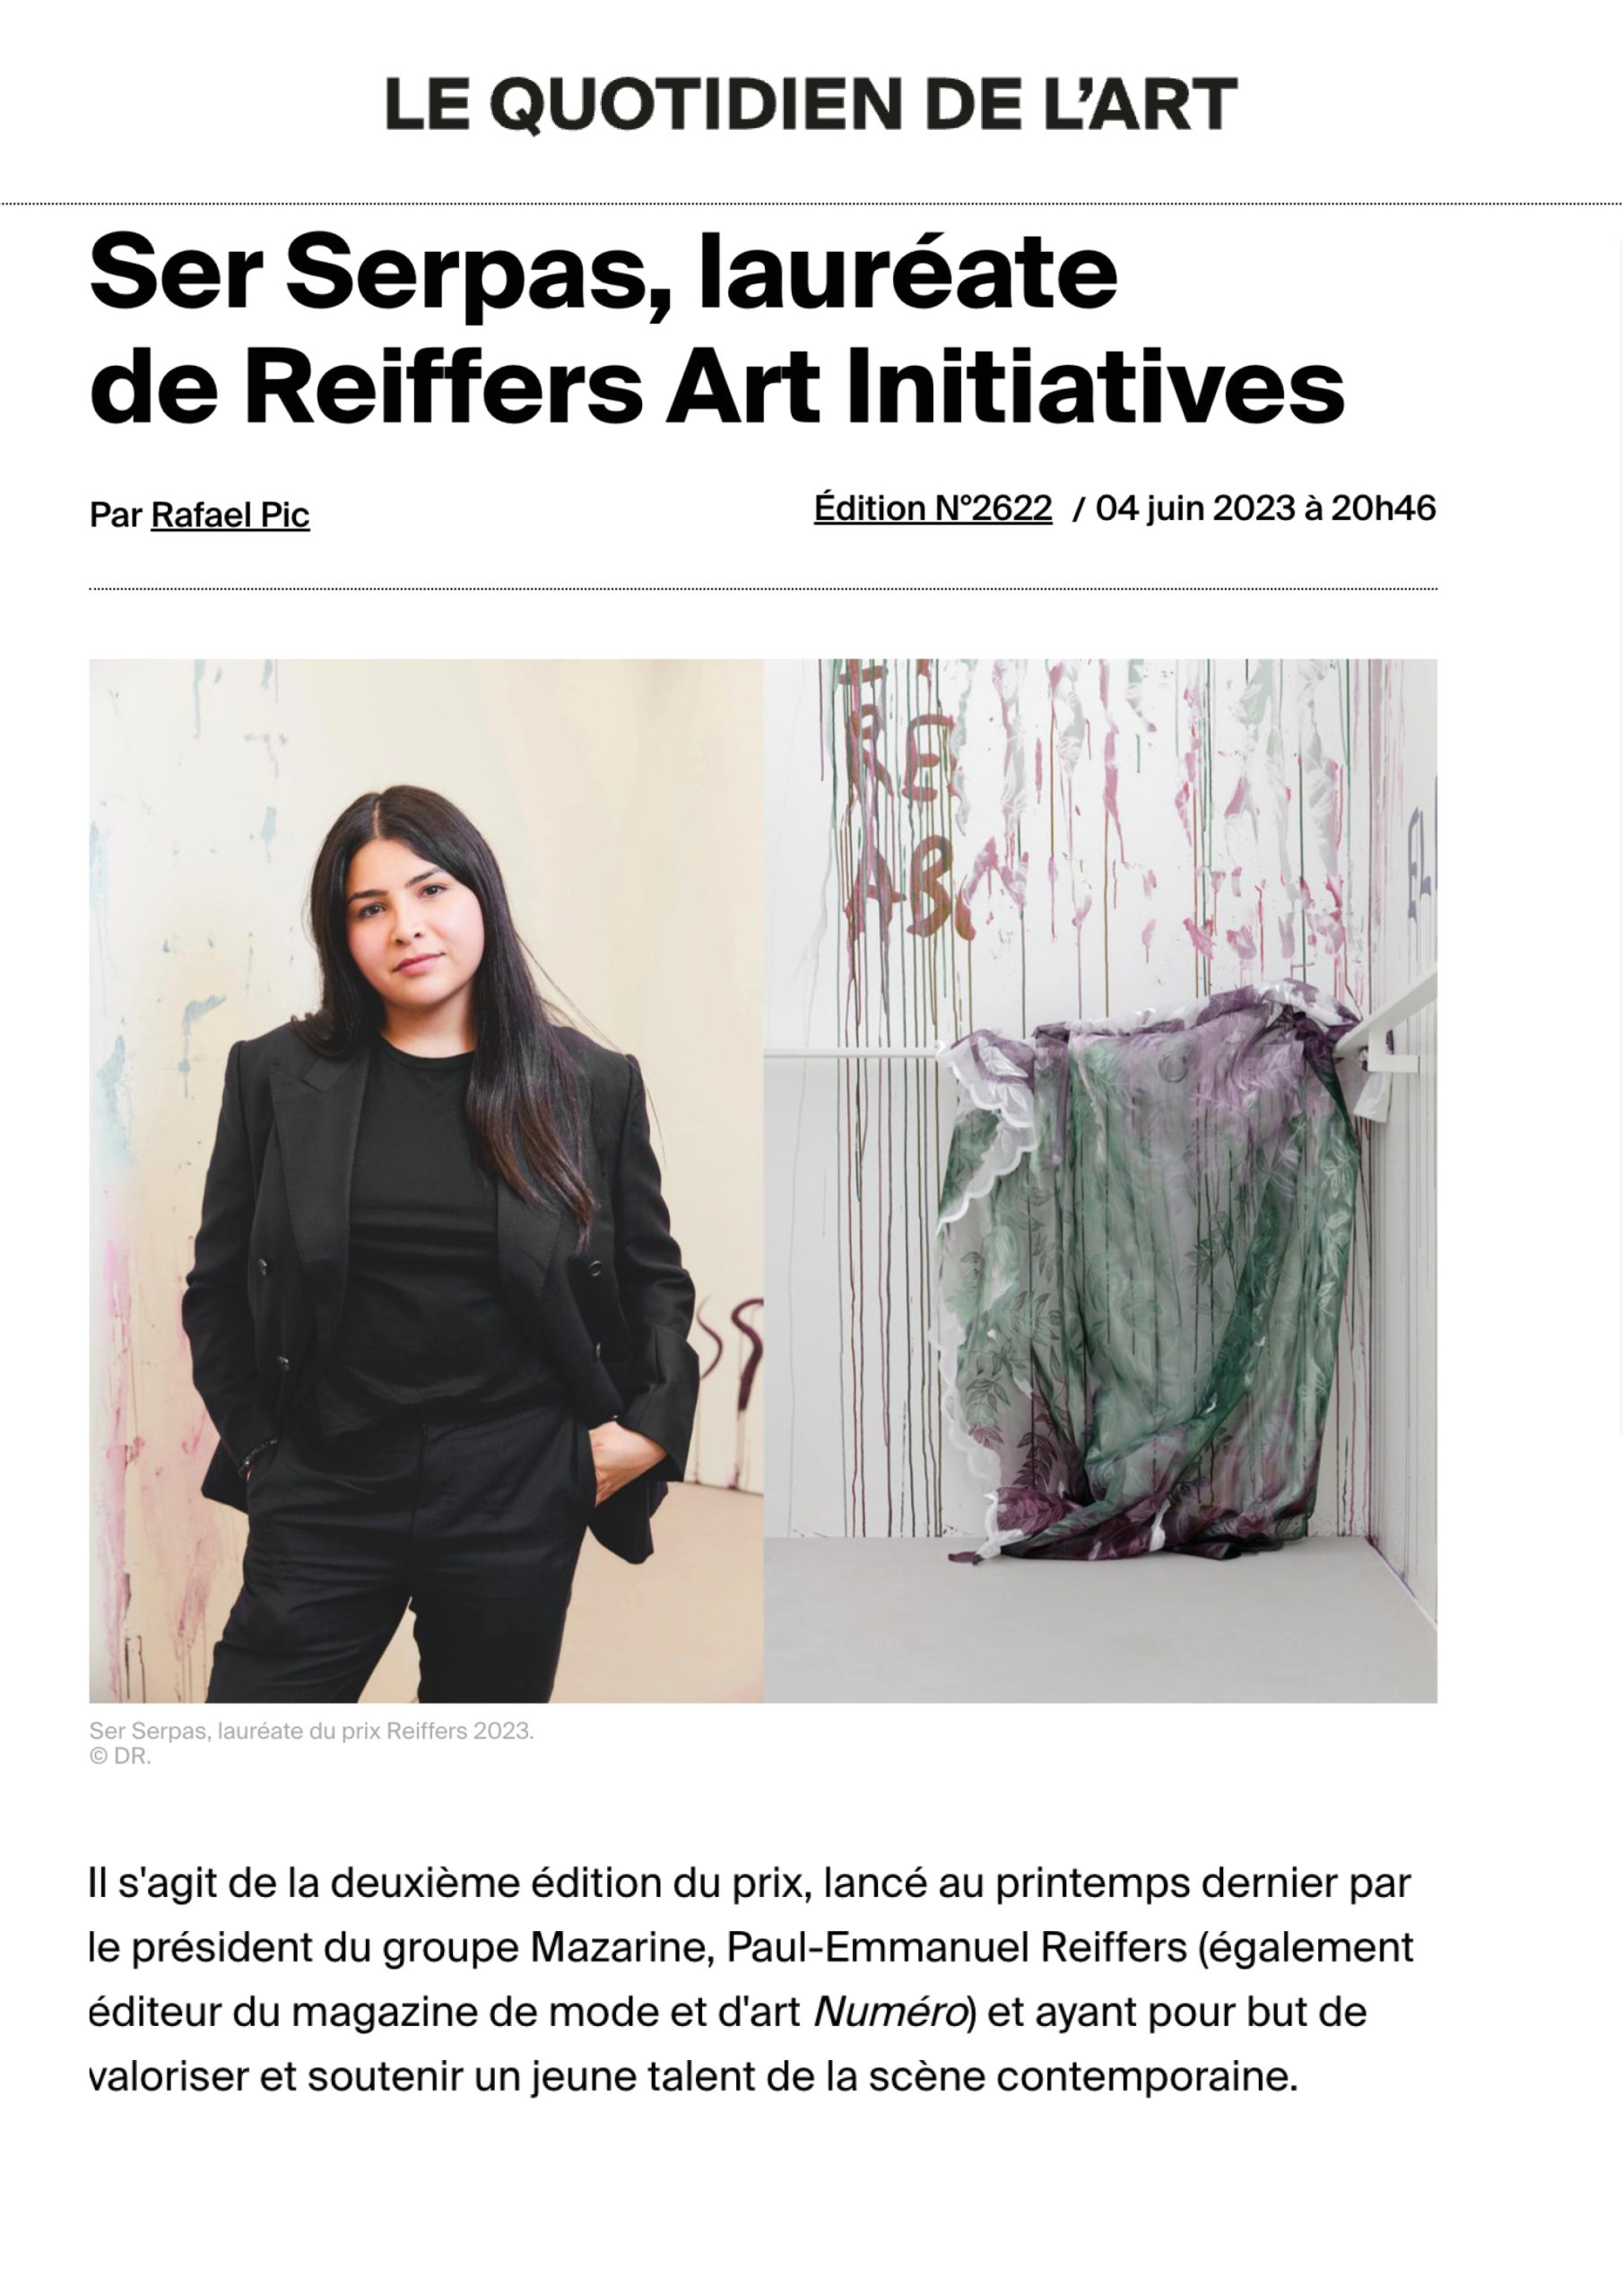 Ser Serpas, Lauréate de Reiffers Art Initiatives